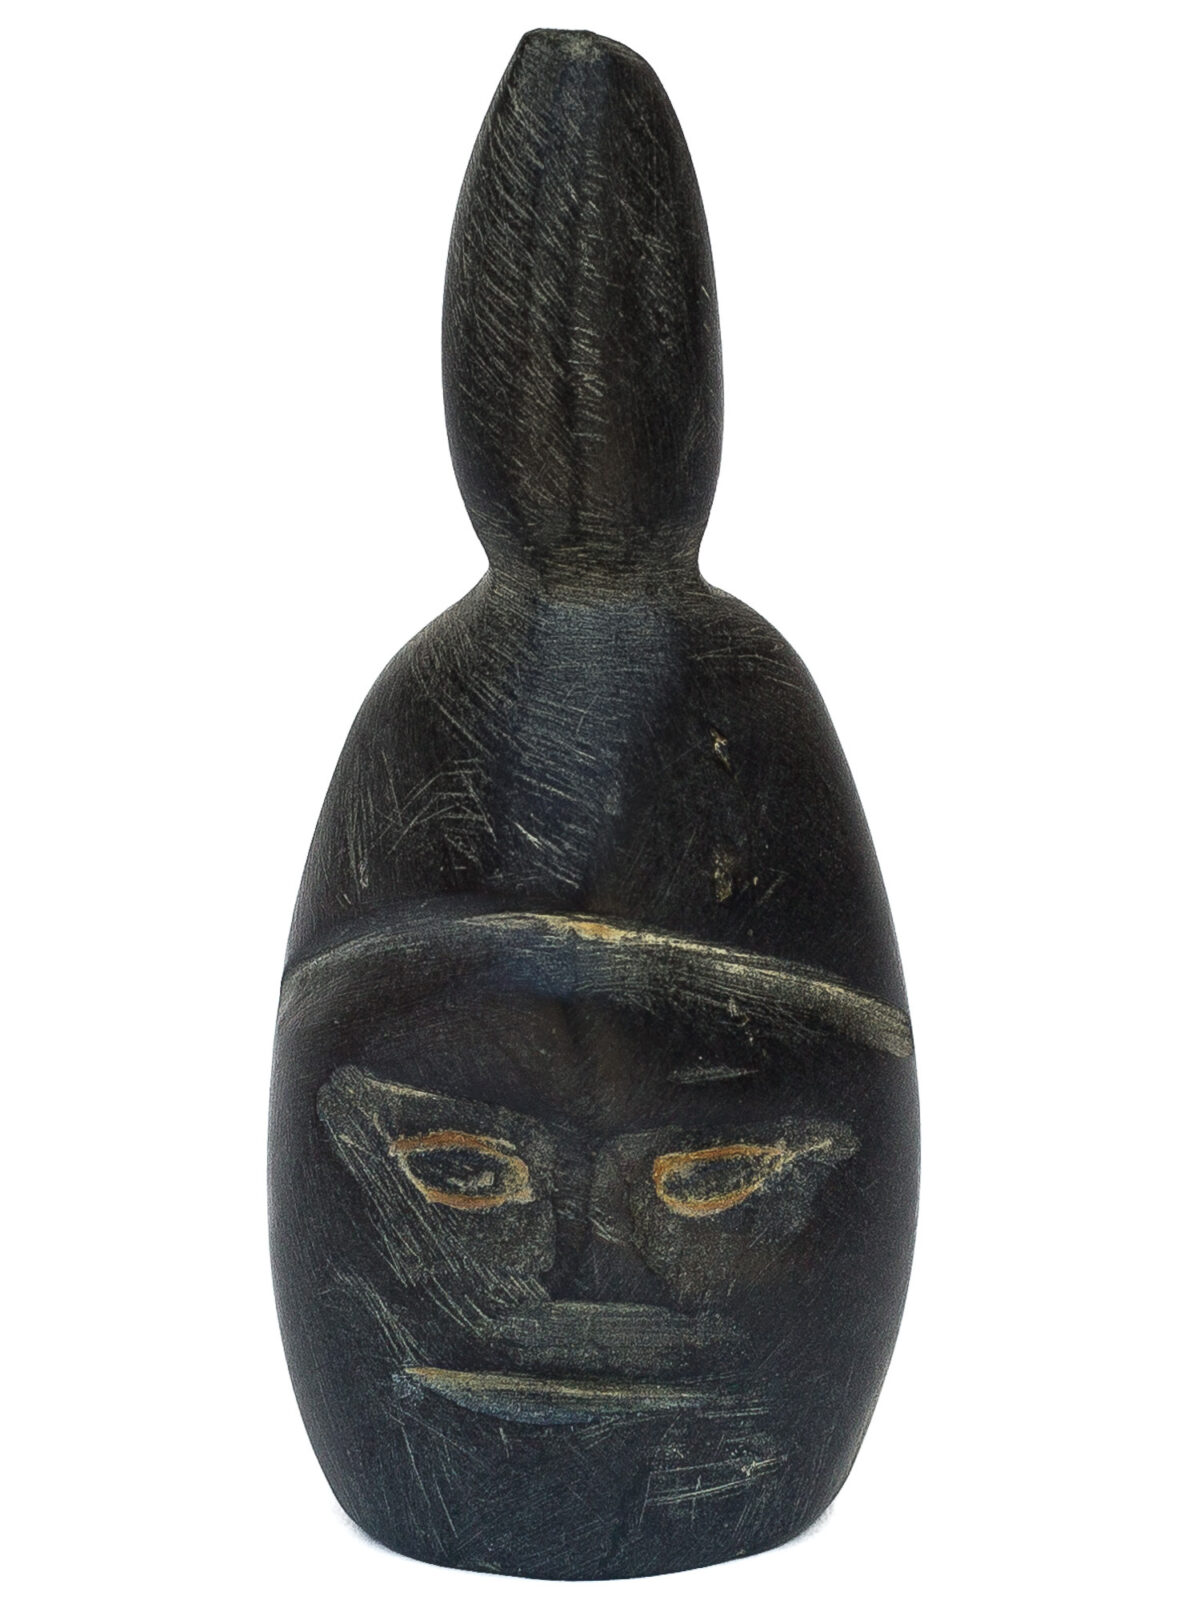 Toona Iquliq - untitled (shaman face)